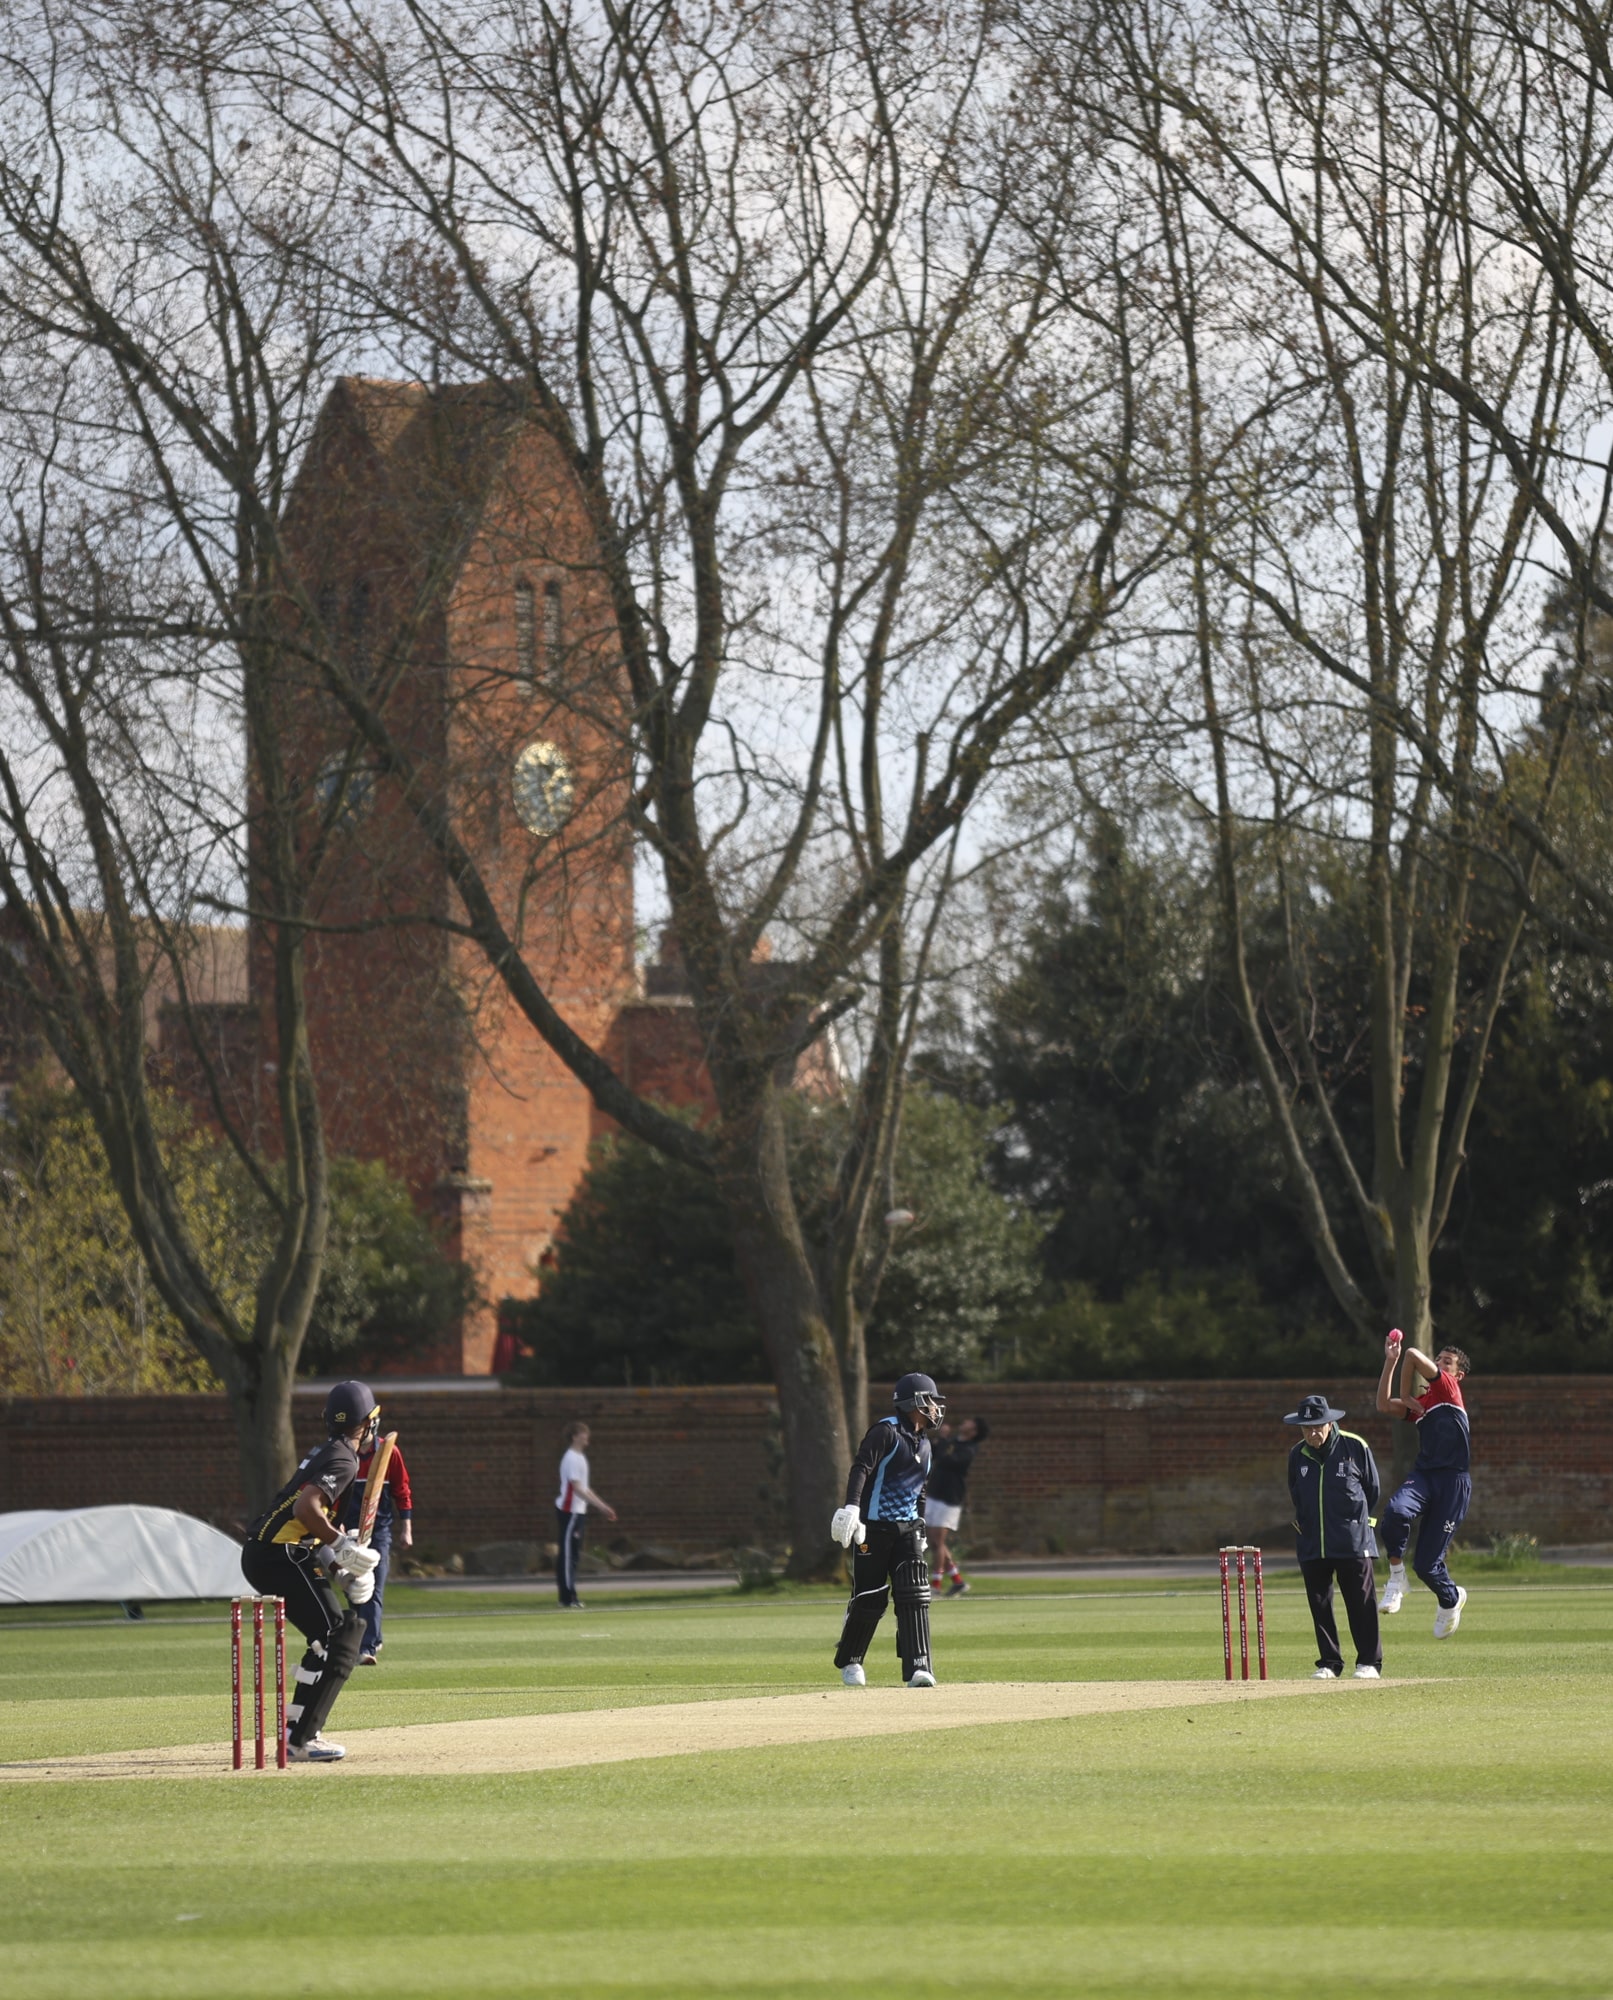 Cricket at Radley College